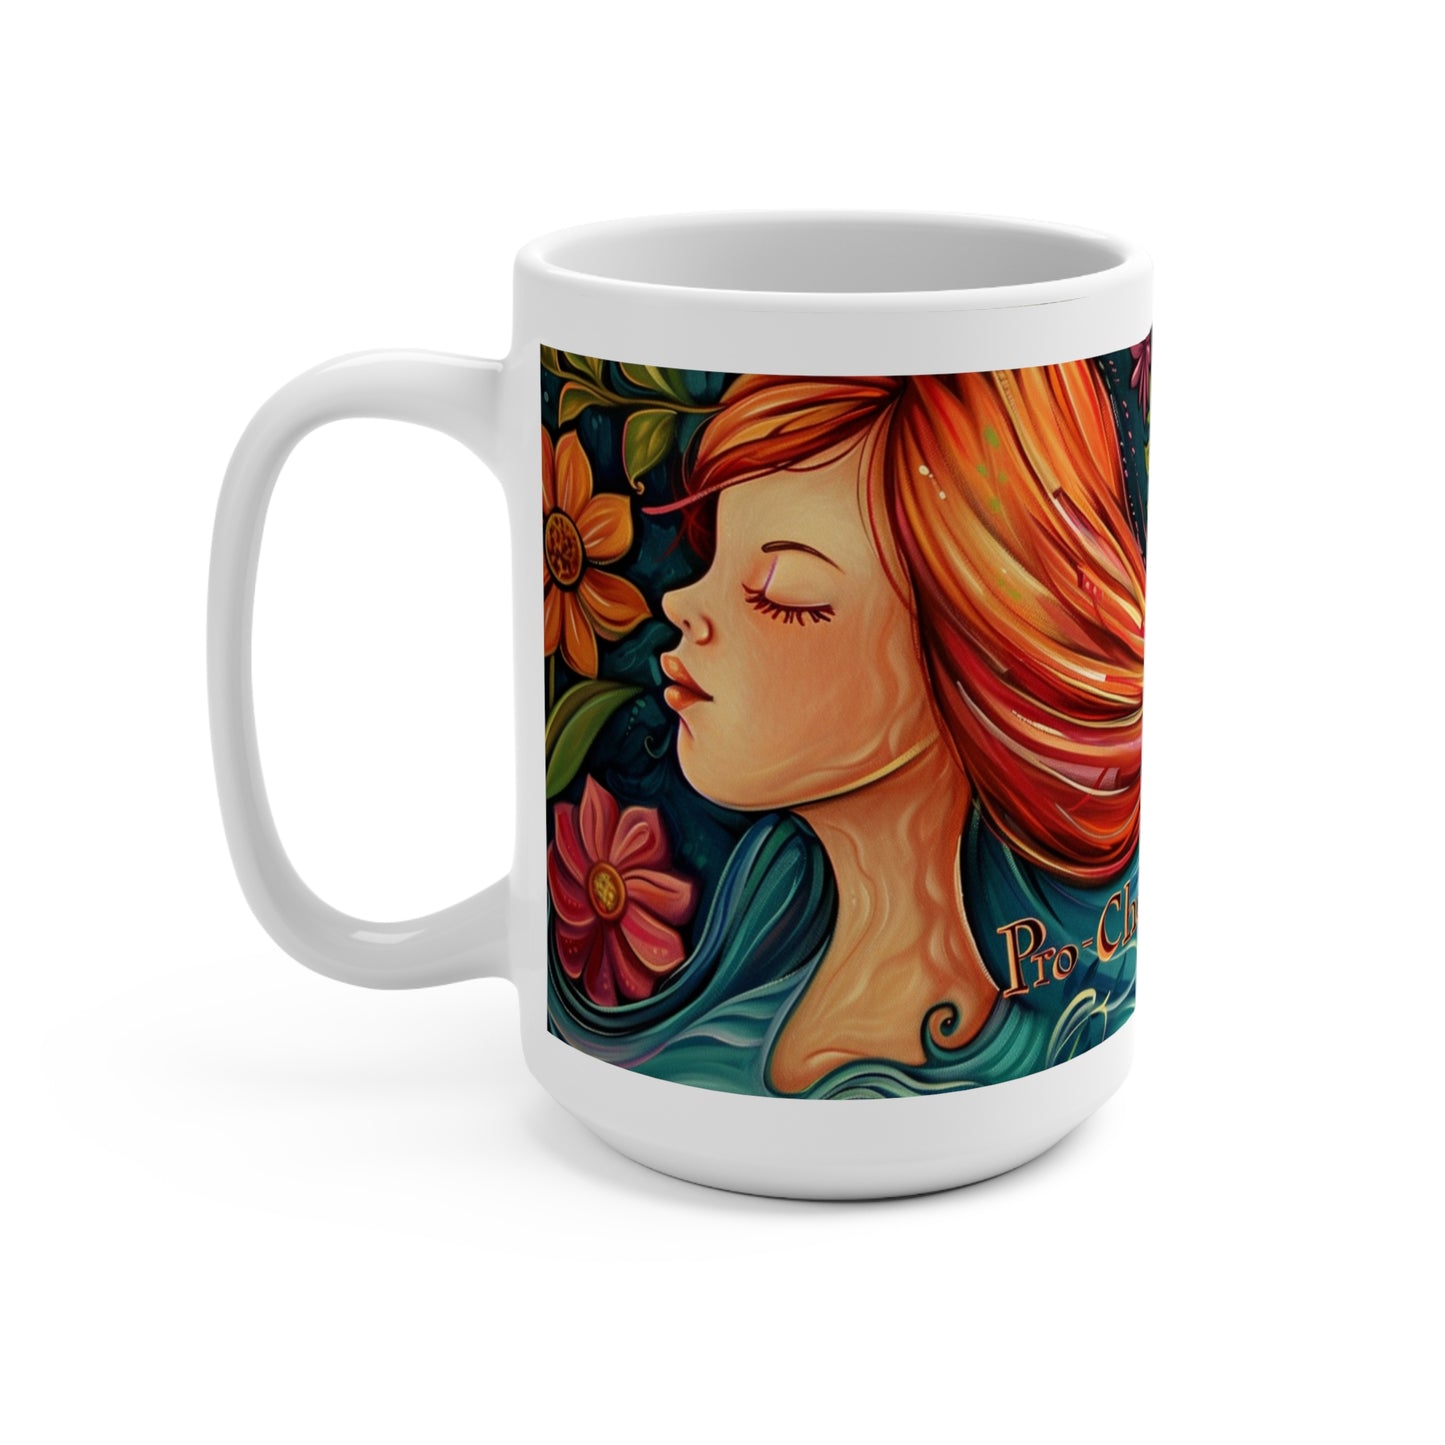 Pro-Choice Mug (15oz) Reproductive Rights Activist Political Coffee Tea Mug | Beauty with a Purpose